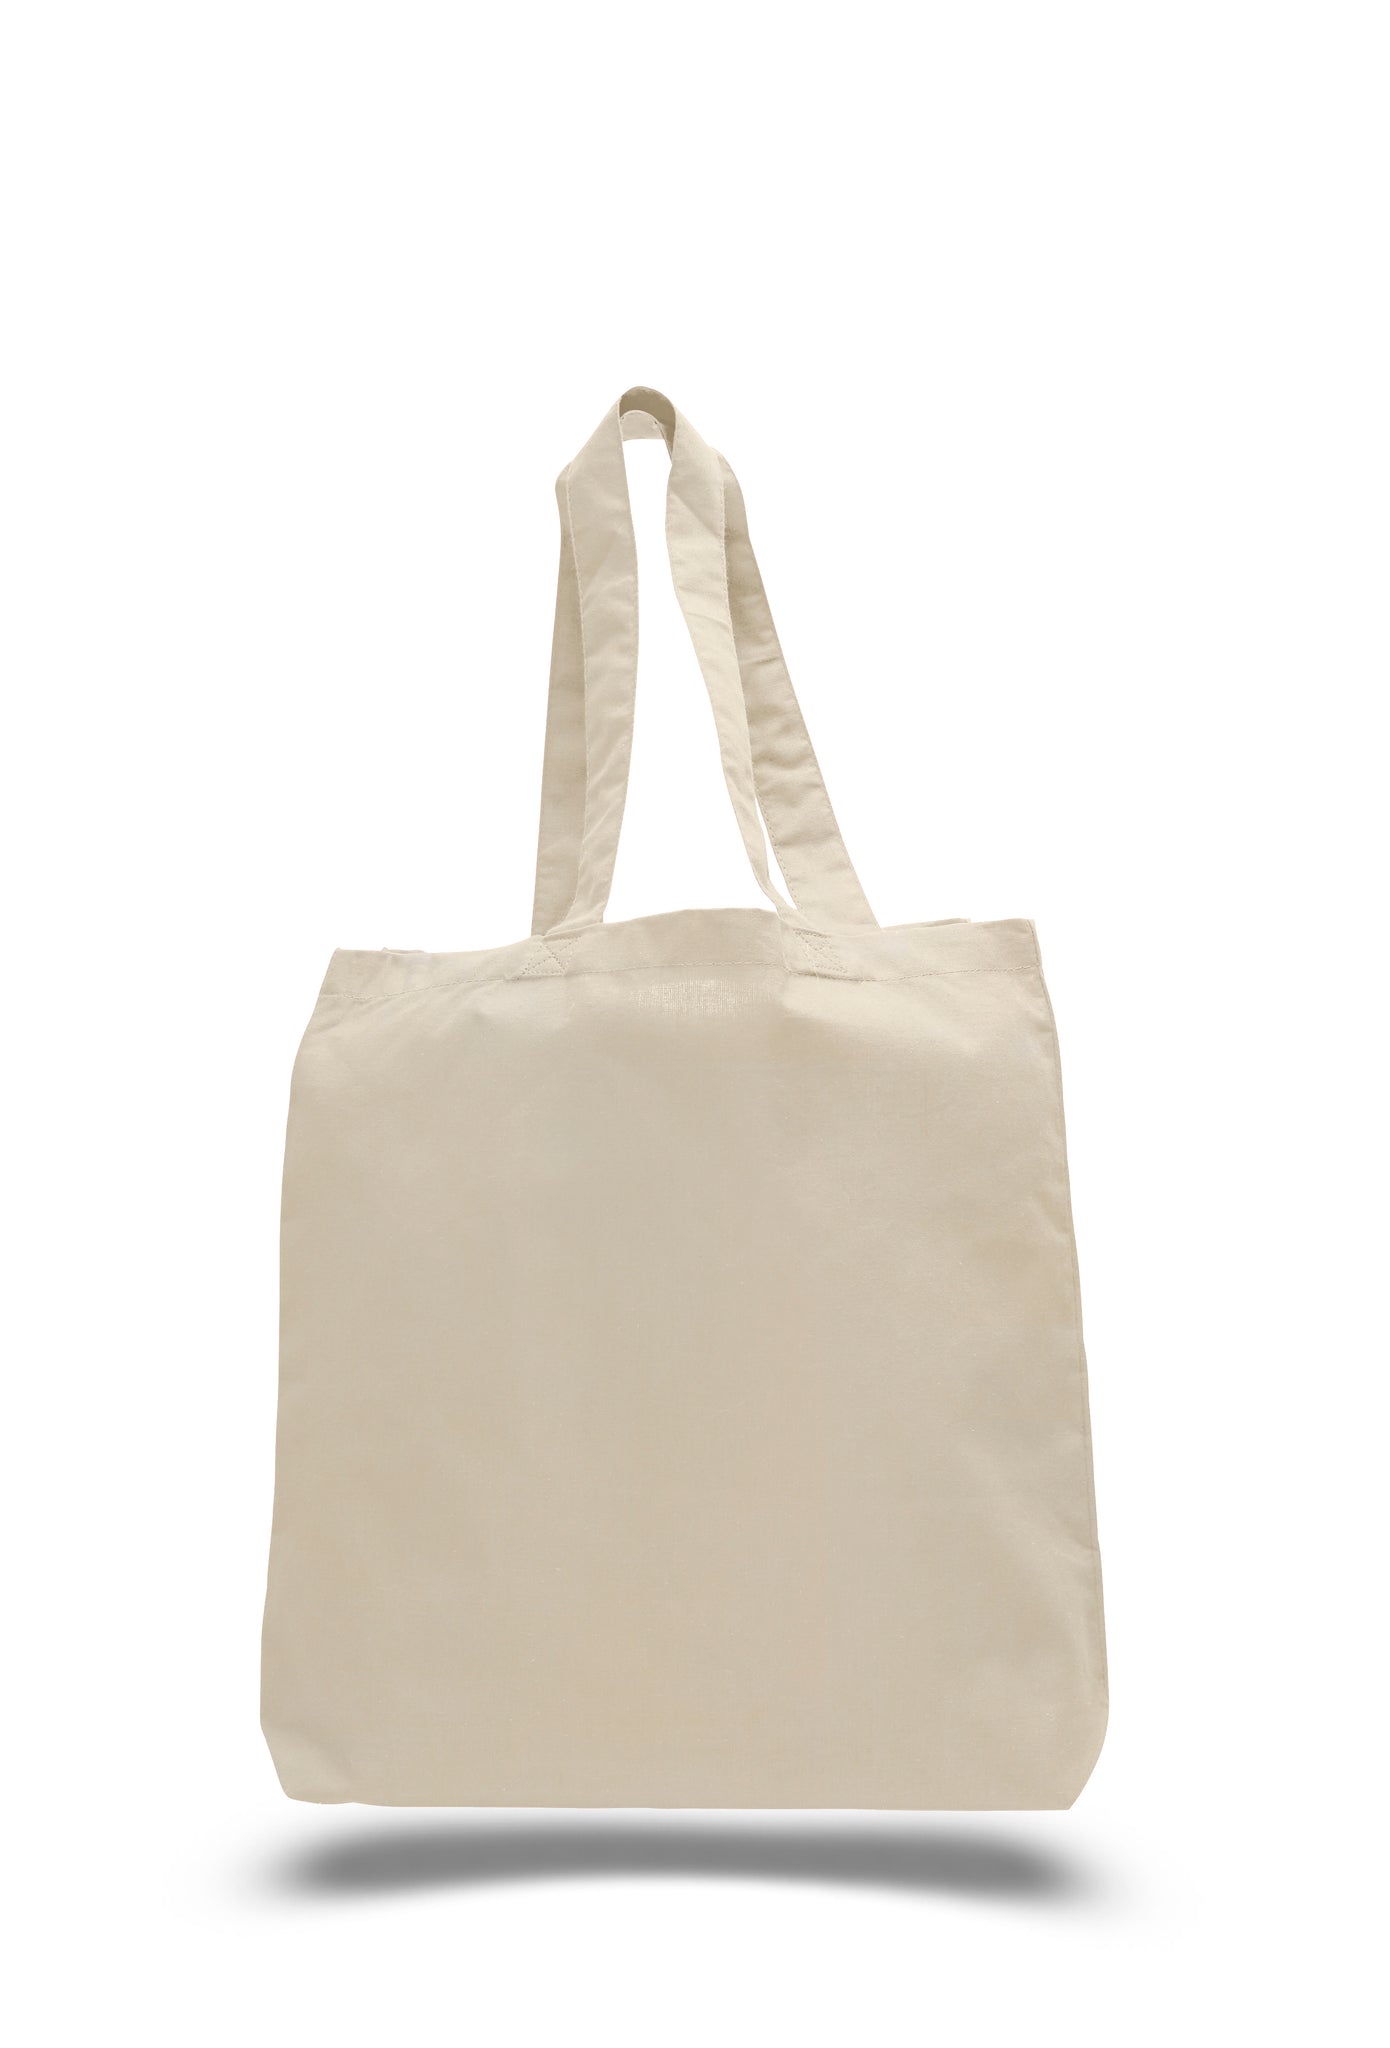 Free SamplePremium Canvas Bag OEM Custom Printing Cotton Bag Reusable  Women Tote Bag  China Canvas Handbag and Hand Bag price  MadeinChinacom